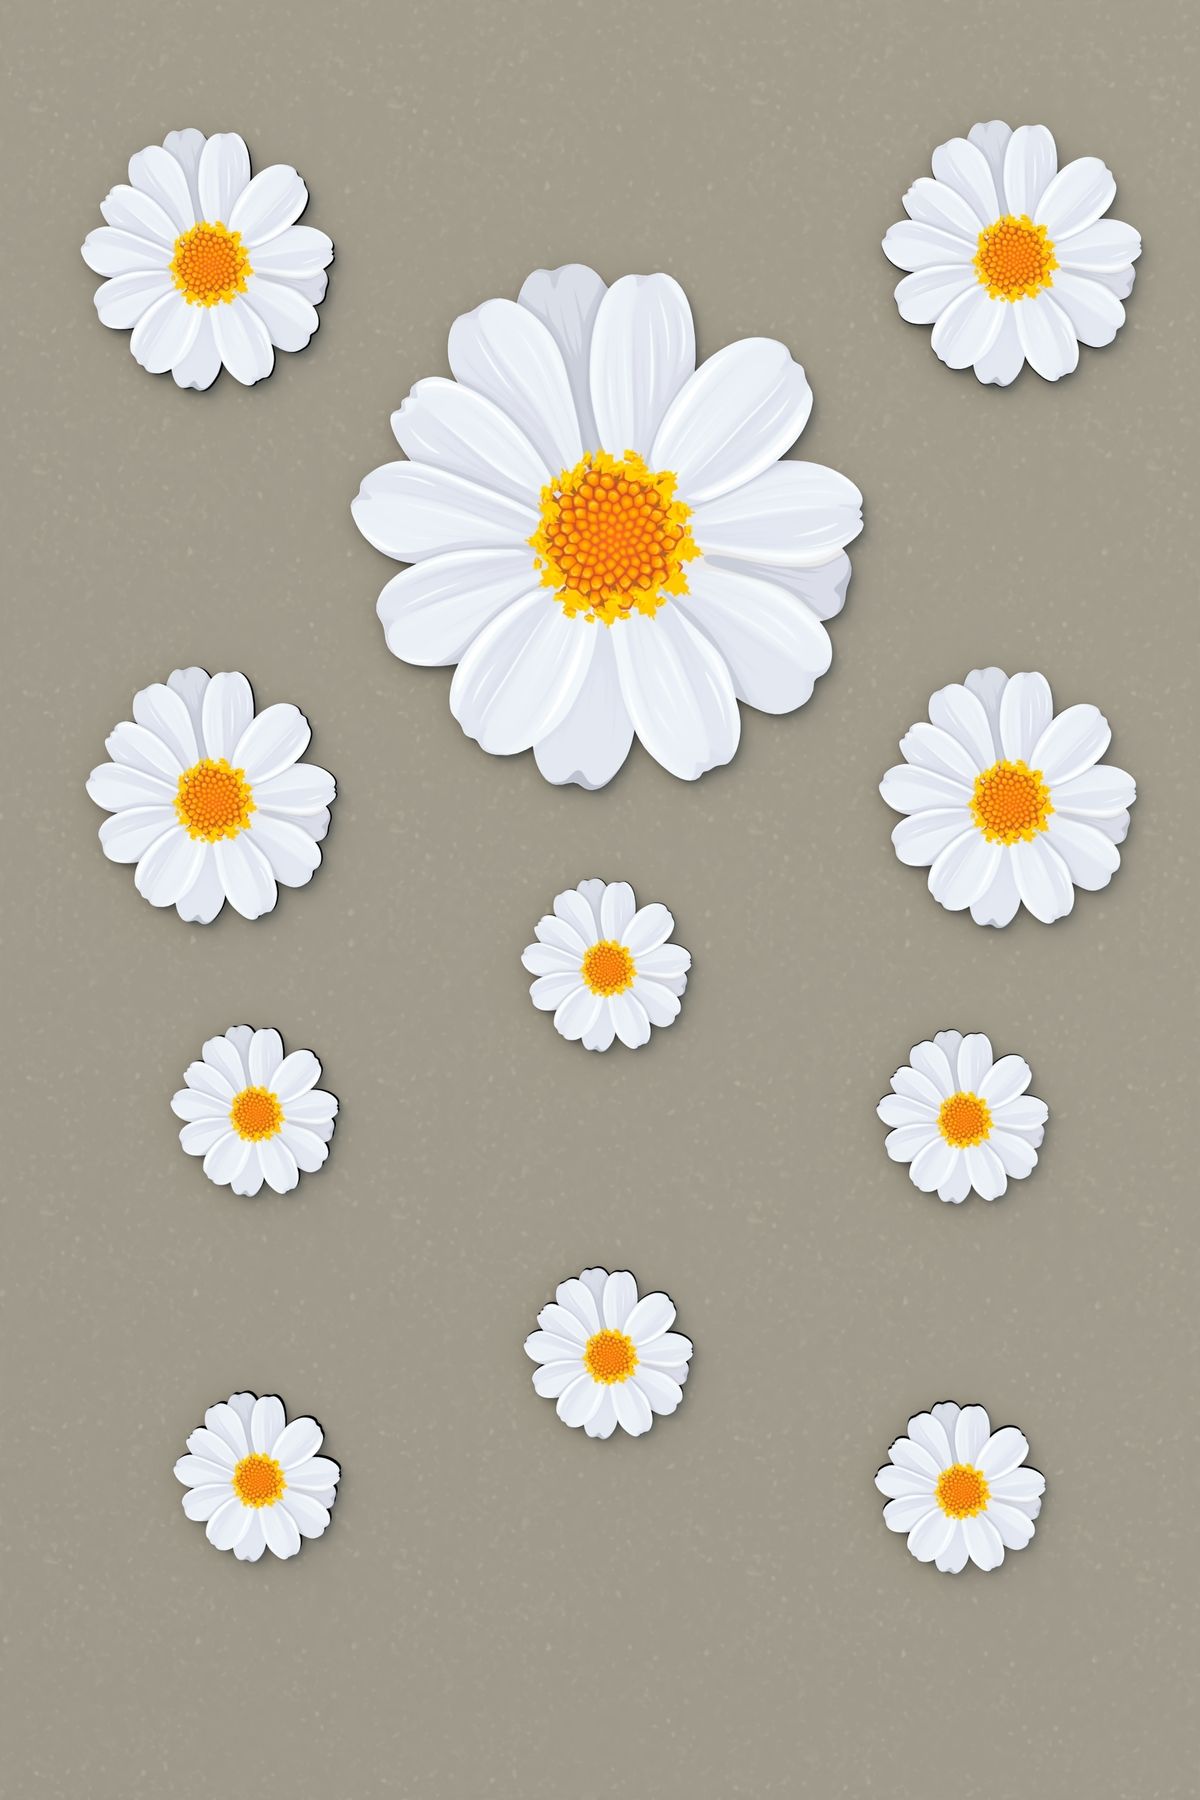 pi10reklam Beyaz Papatya 11 Adet Ahşap Dolap Kapı Duvar Süsü Çiçek Figürlü Dekoratif